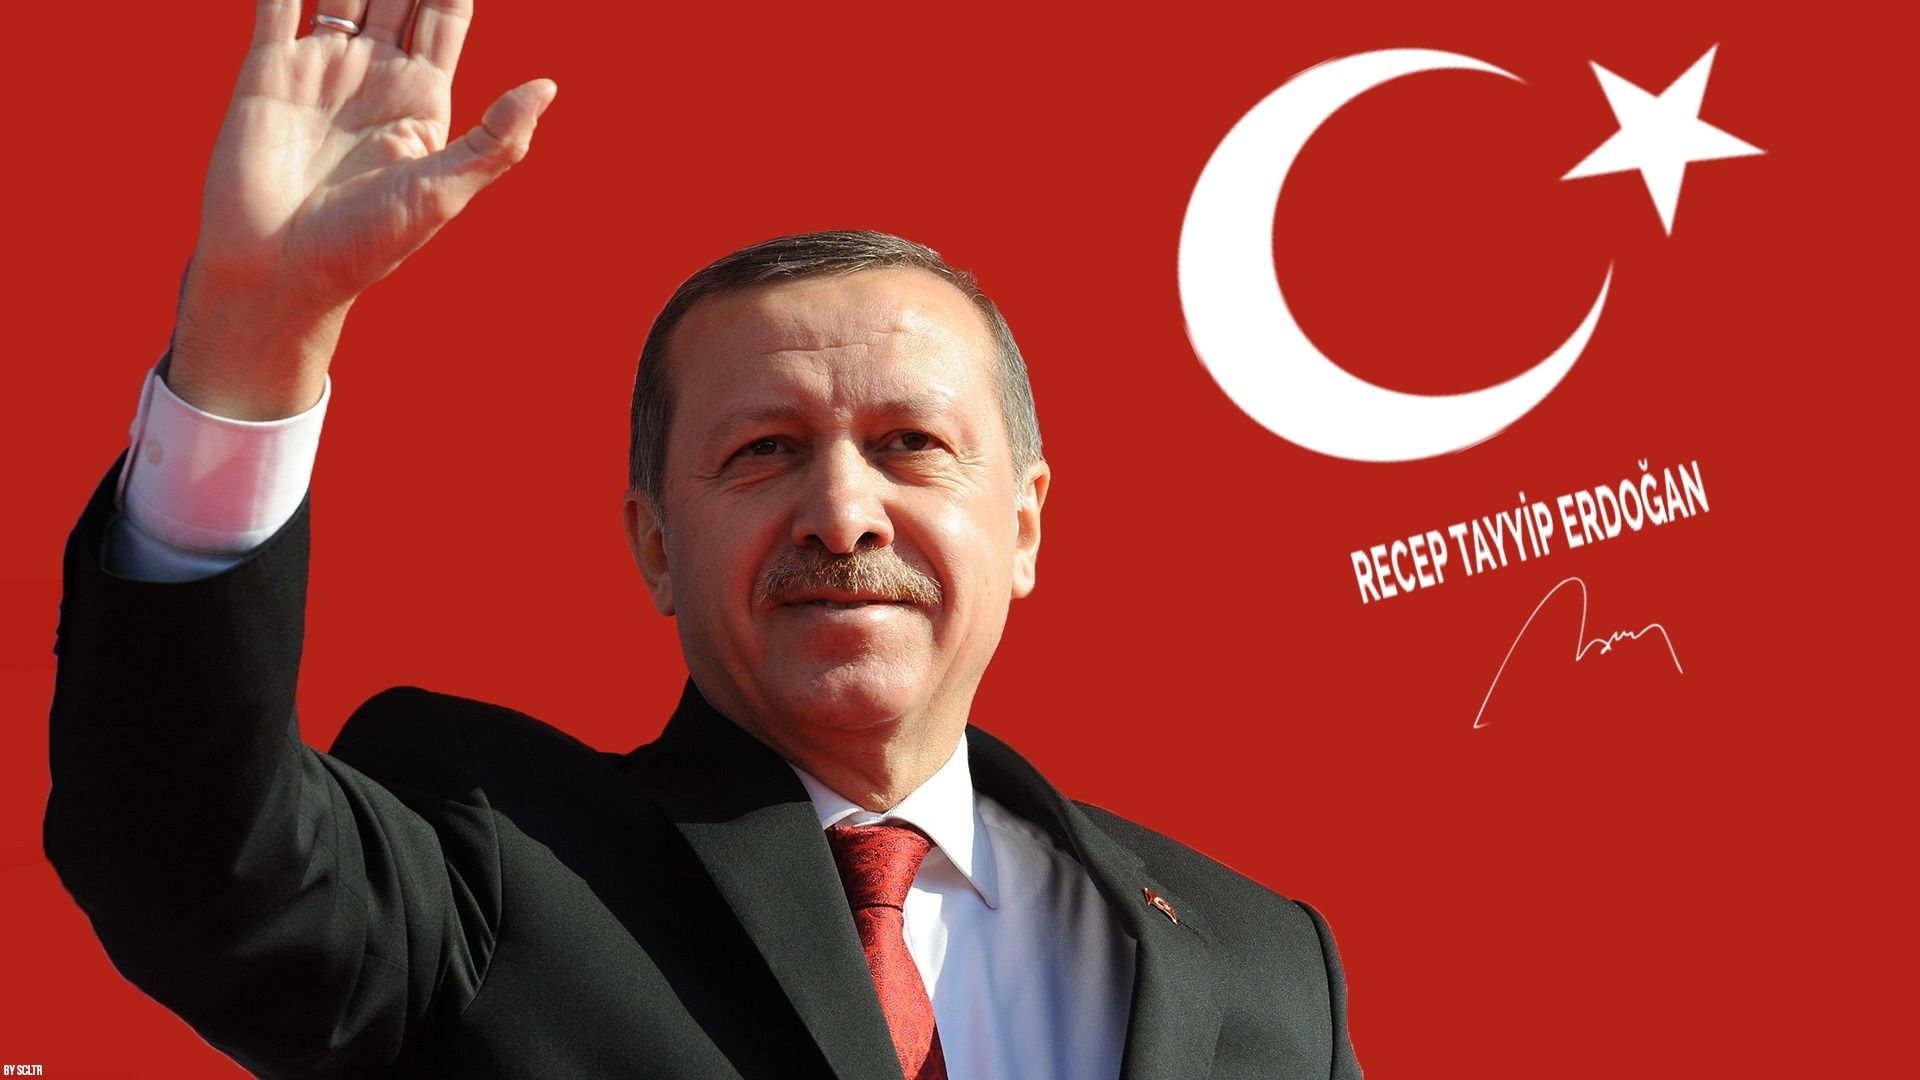 PsBattle: Recep Tayyip Erdoğan, president of Turkey